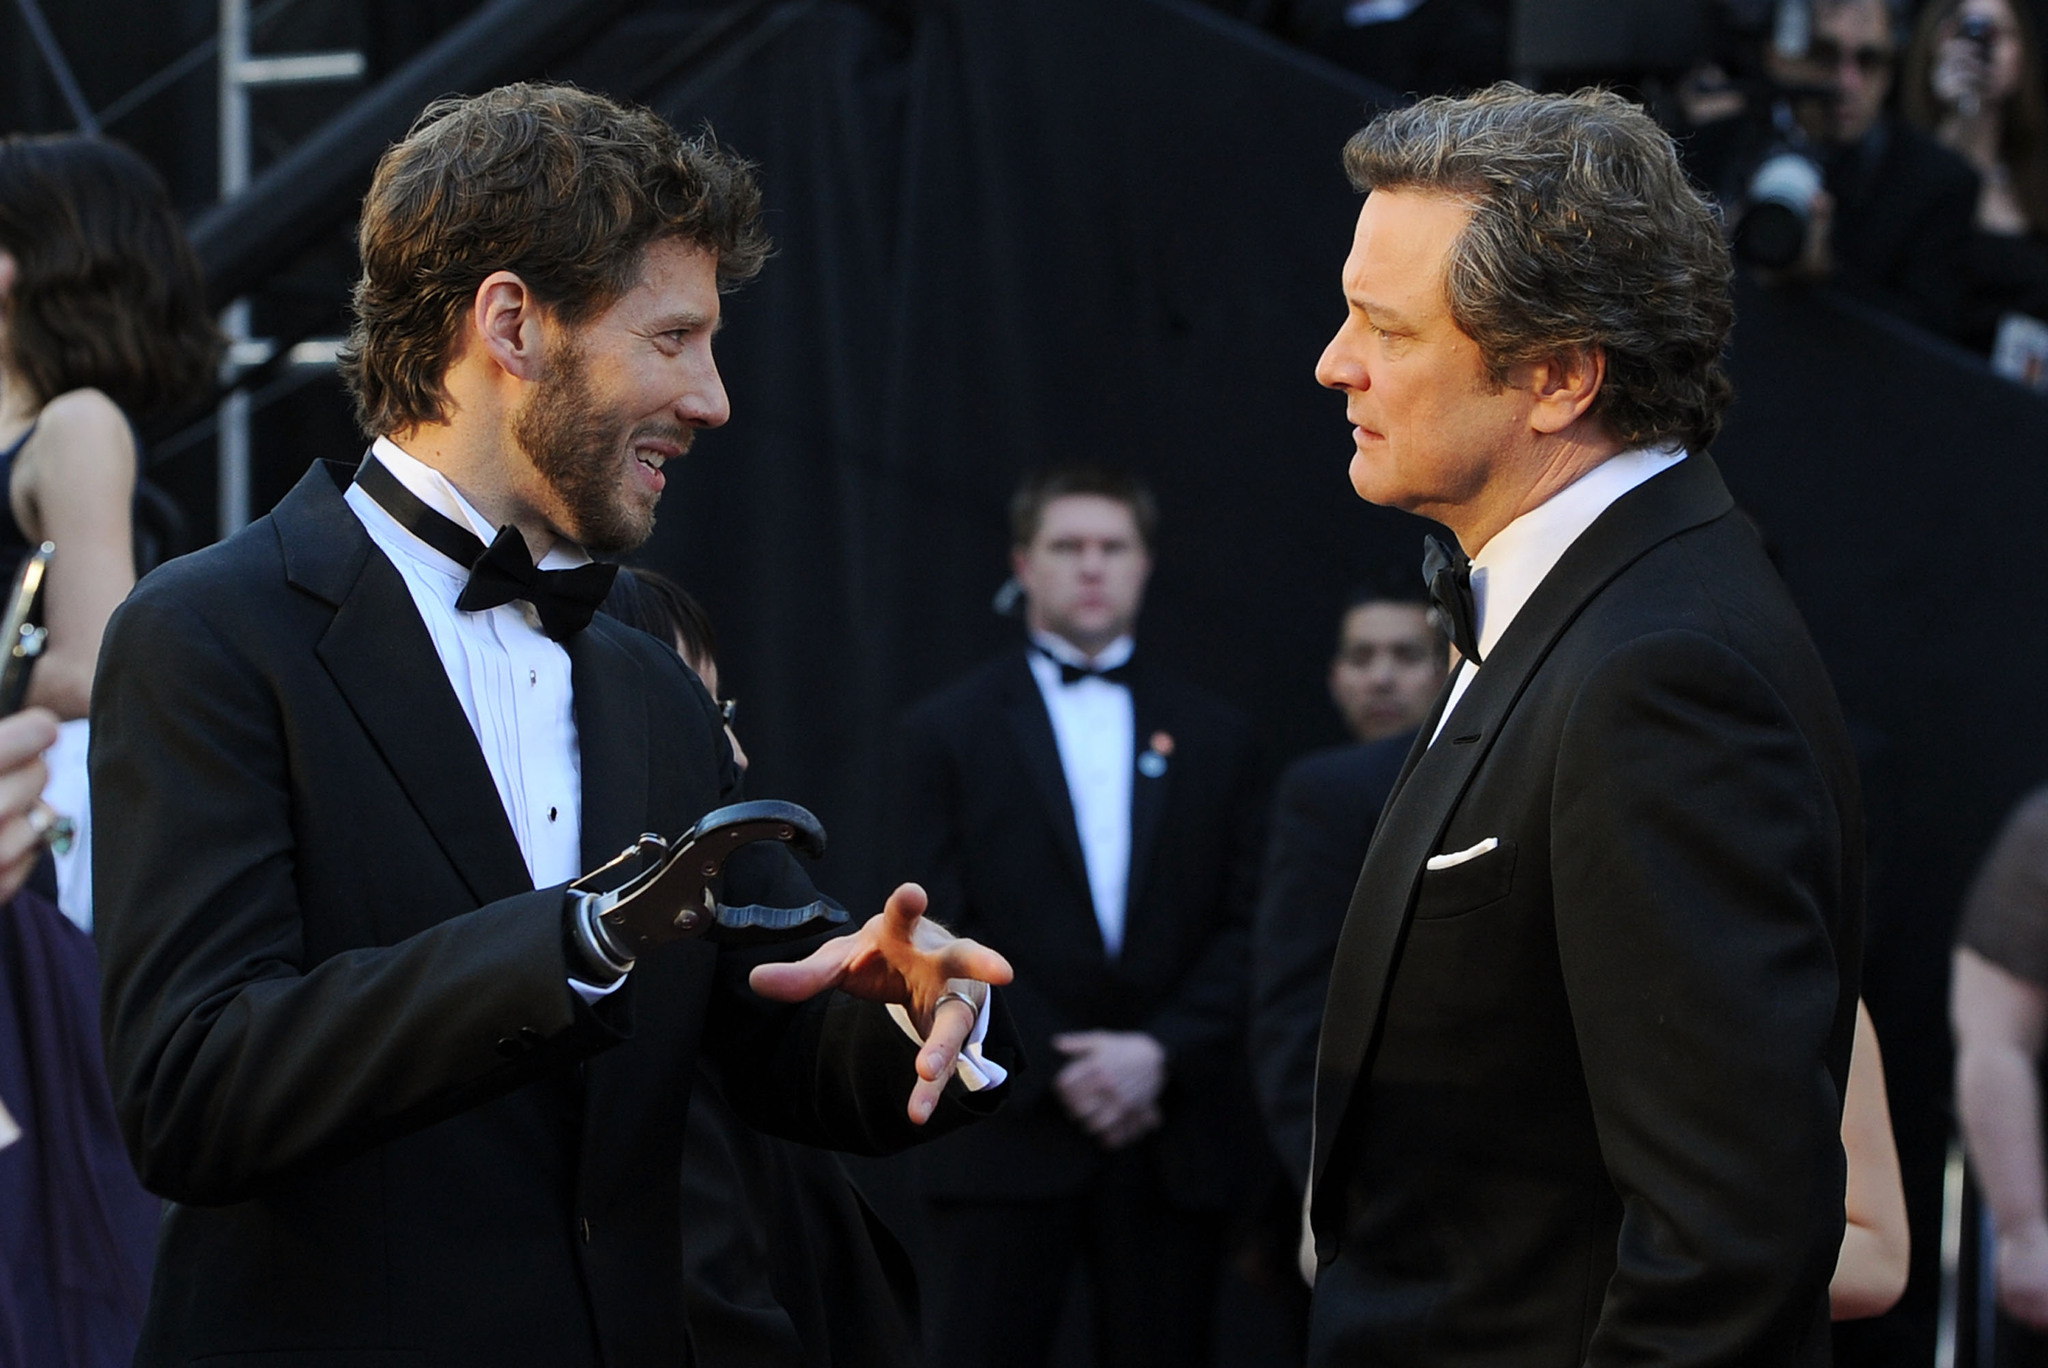 Colin Firth and Aron Ralston